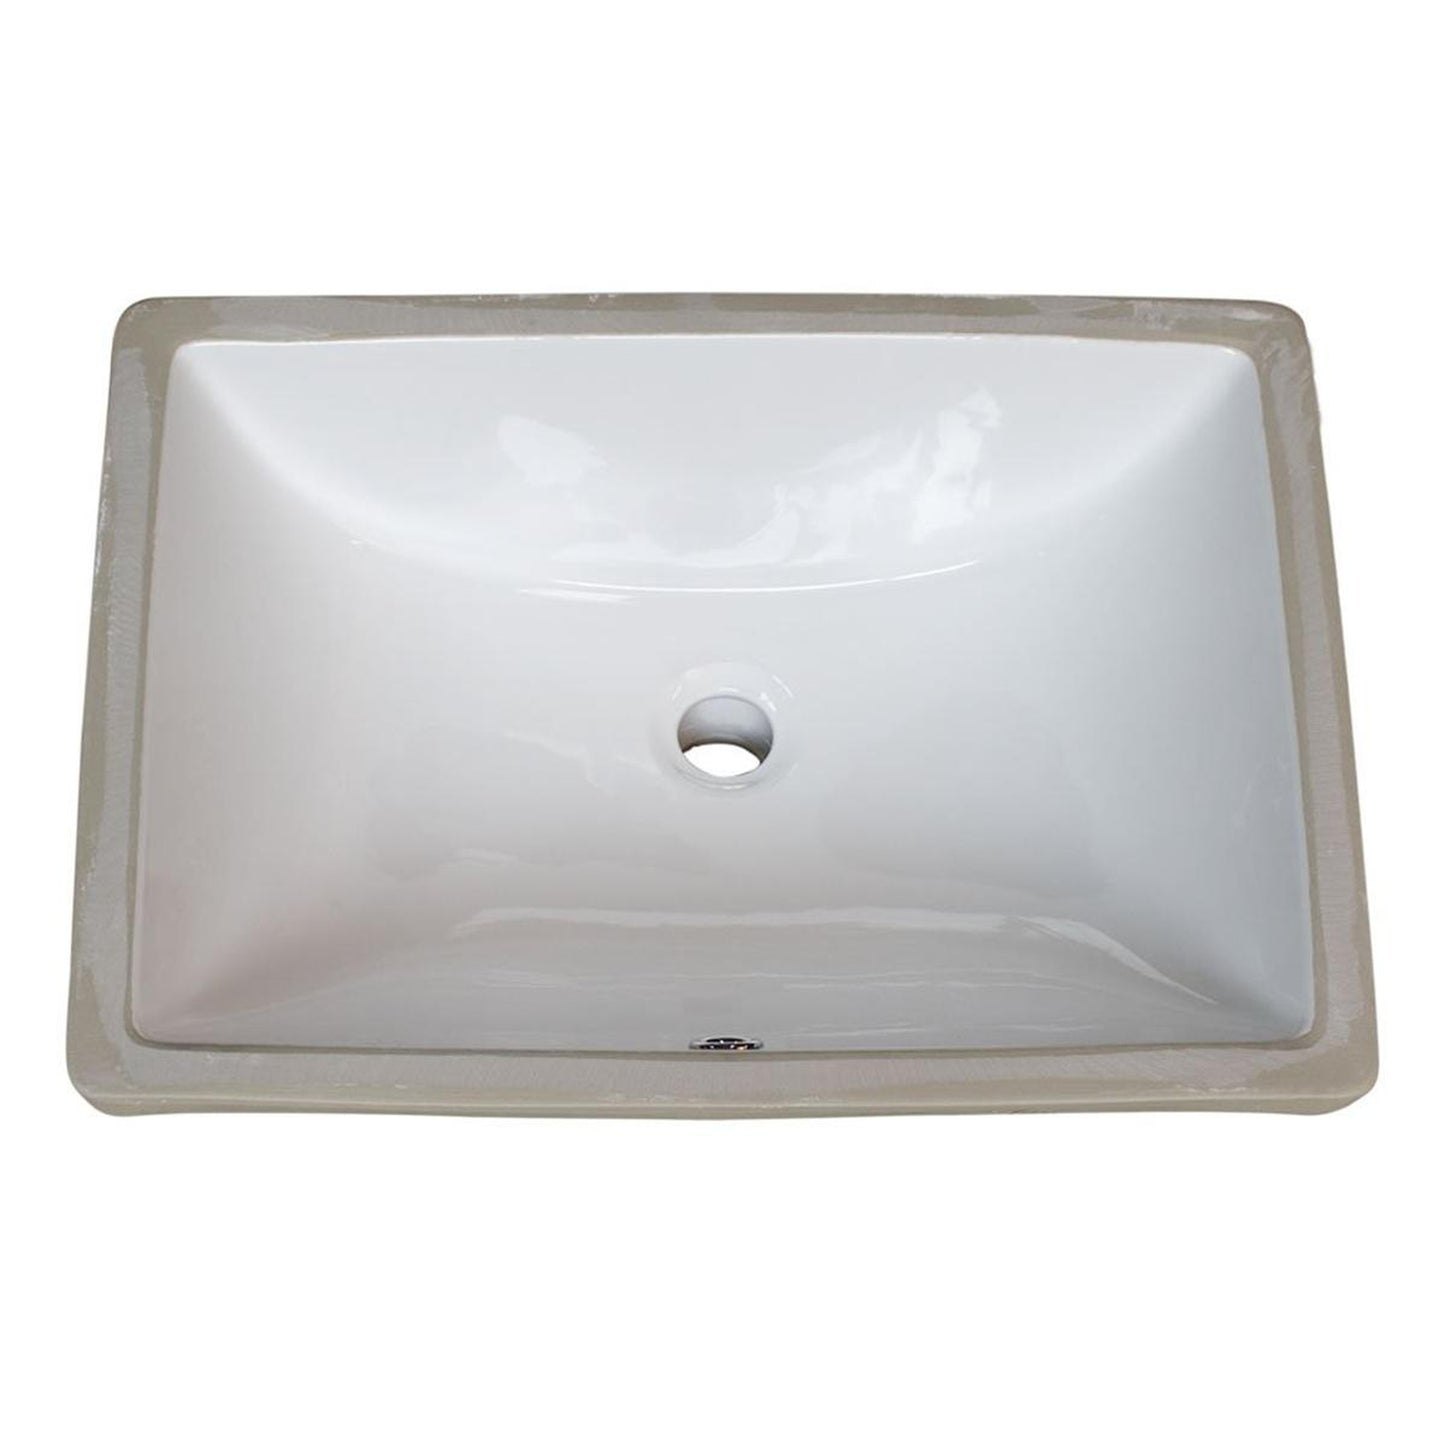 Pelican Int'l Pearl Series PL-3099 18" x 13" Bone Porcelain Undermount Bathroom Sink